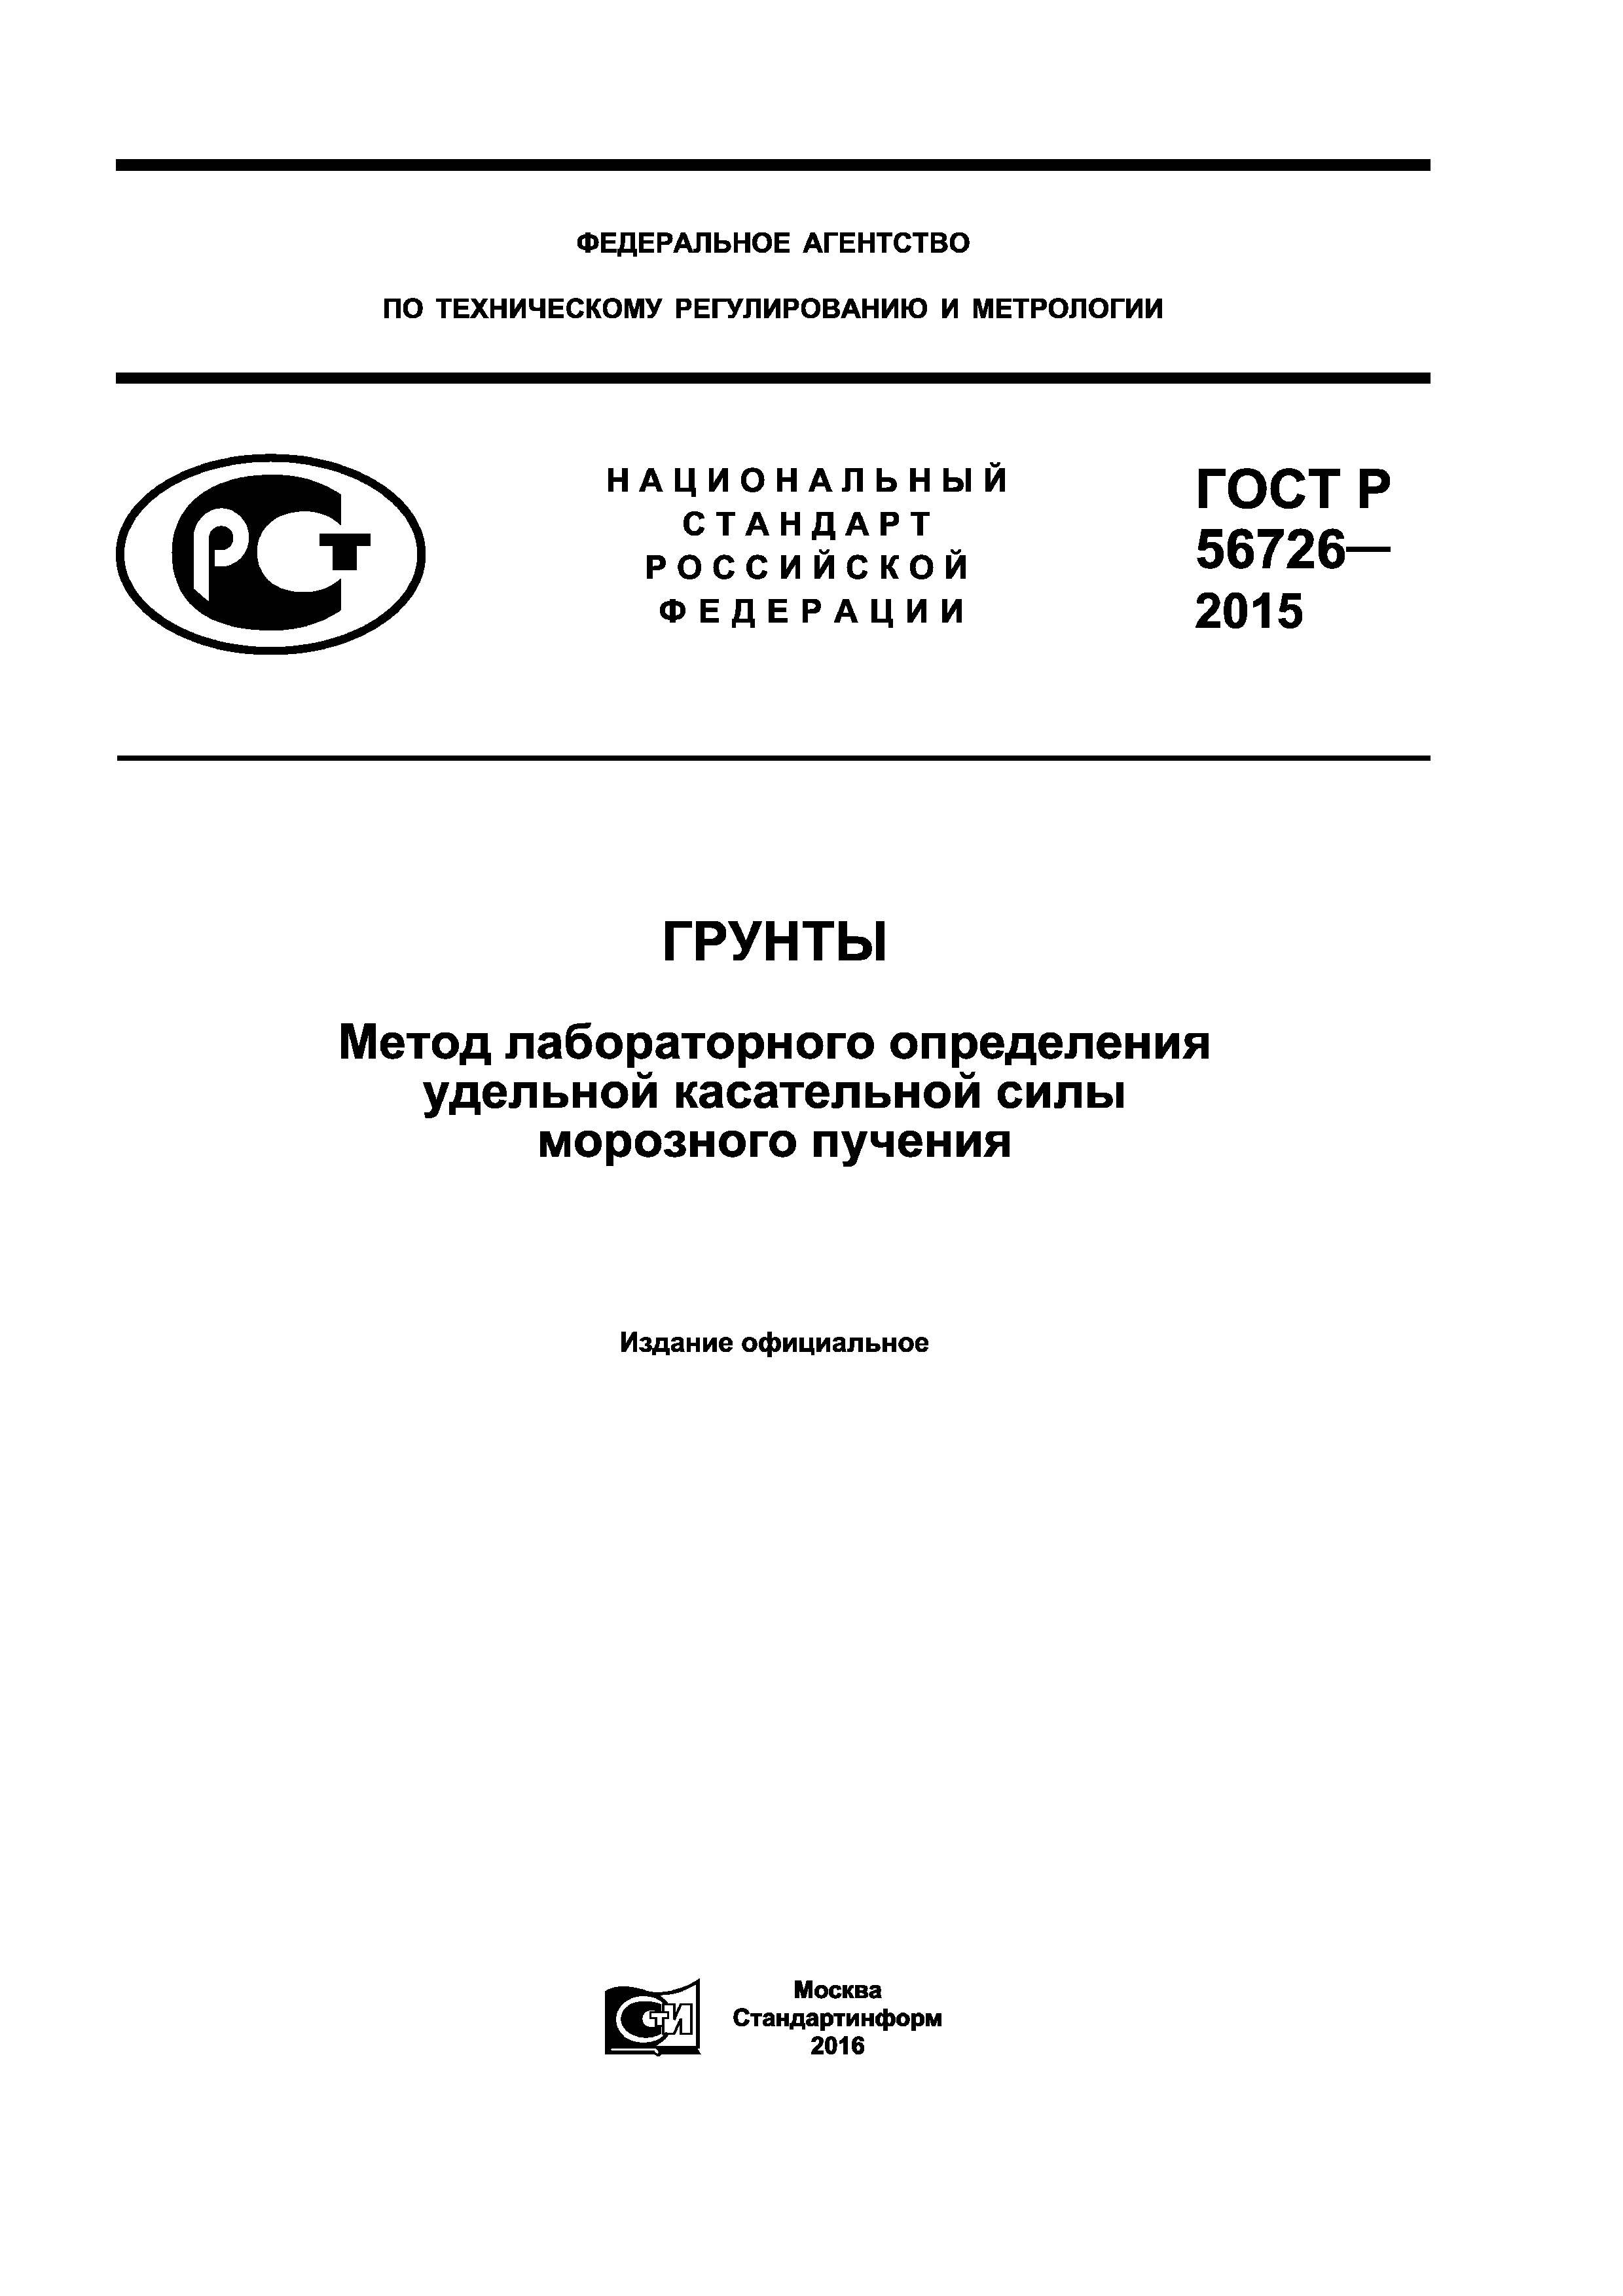 ГОСТ Р 56726-2015